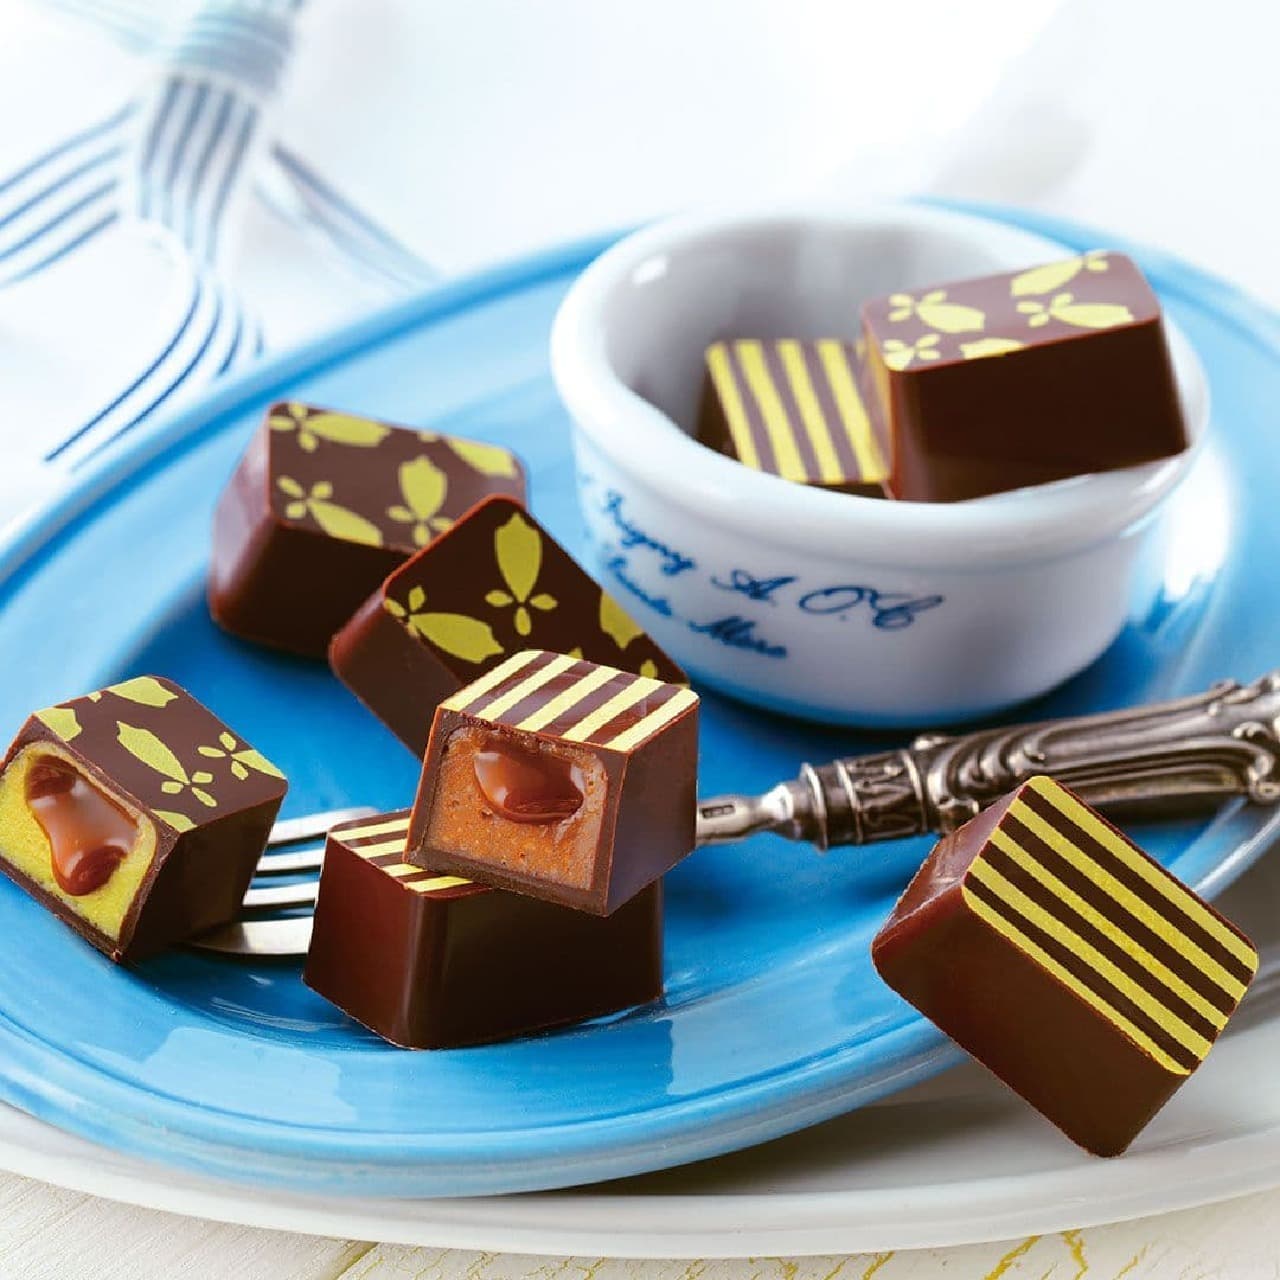 Lloyds "Praline Chocolat [Caramel Duo]".